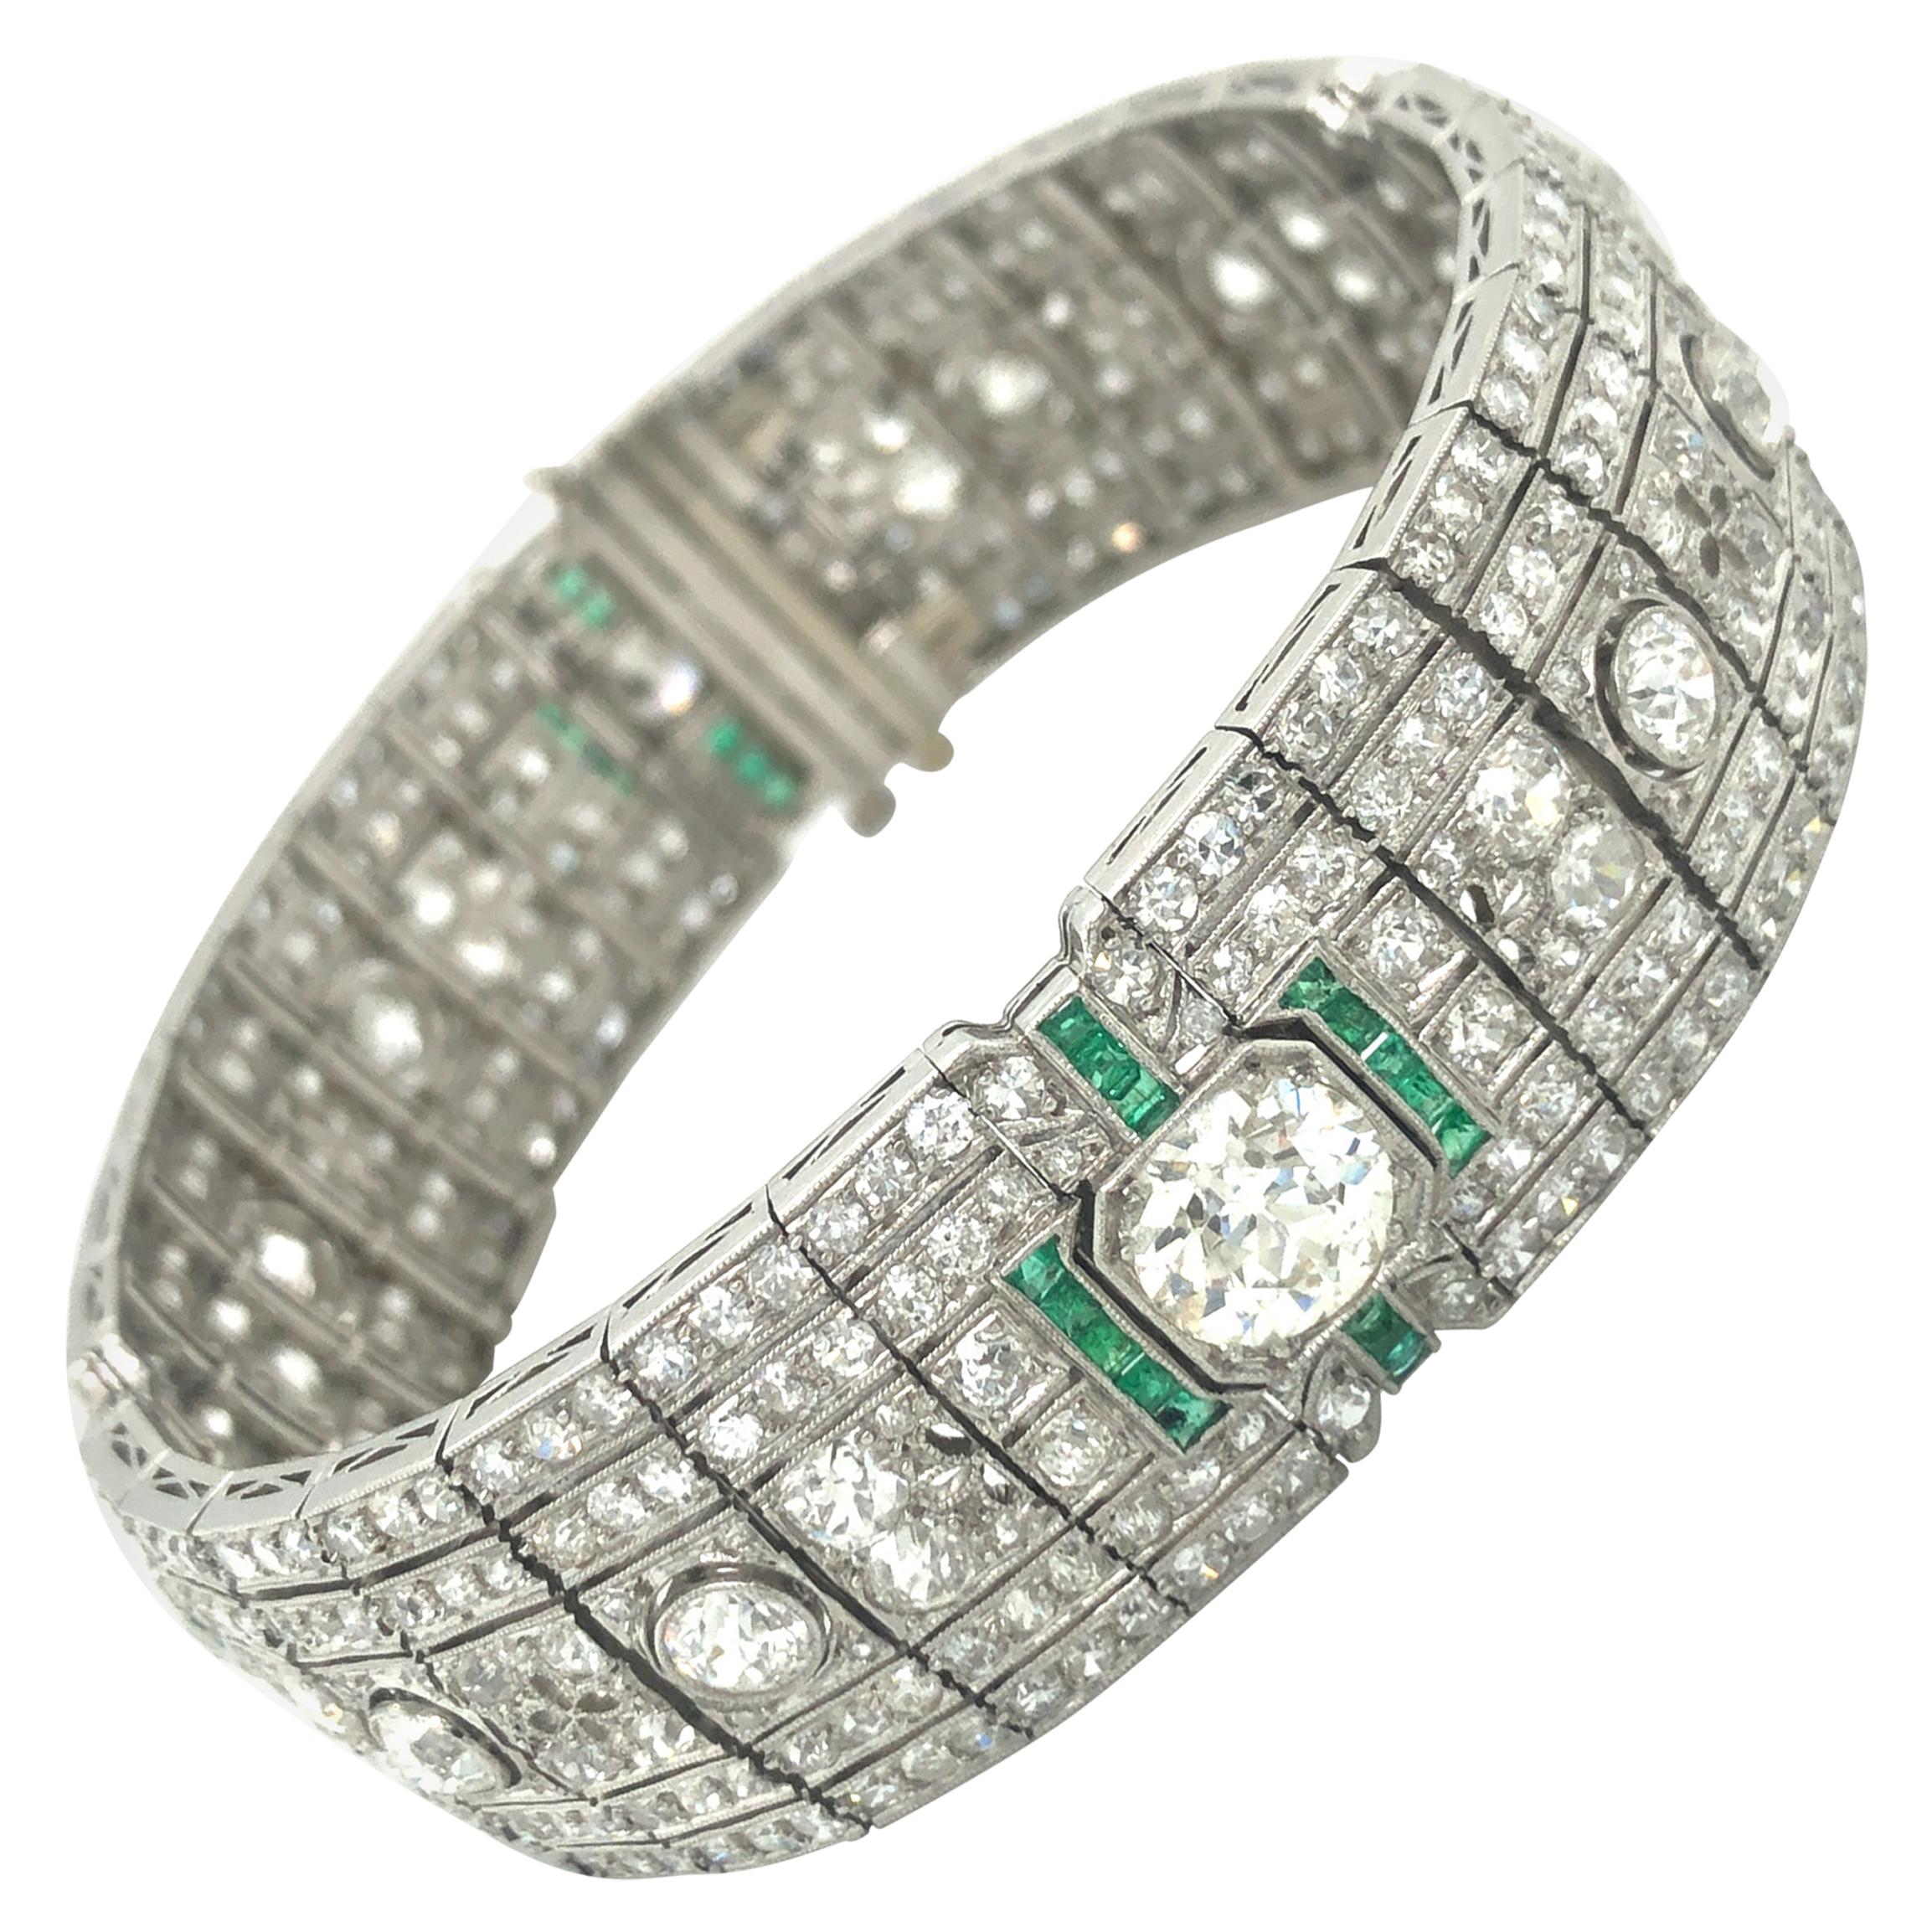  Art Deco Diamond and Emerald Bracelet in Platinum  For Sale